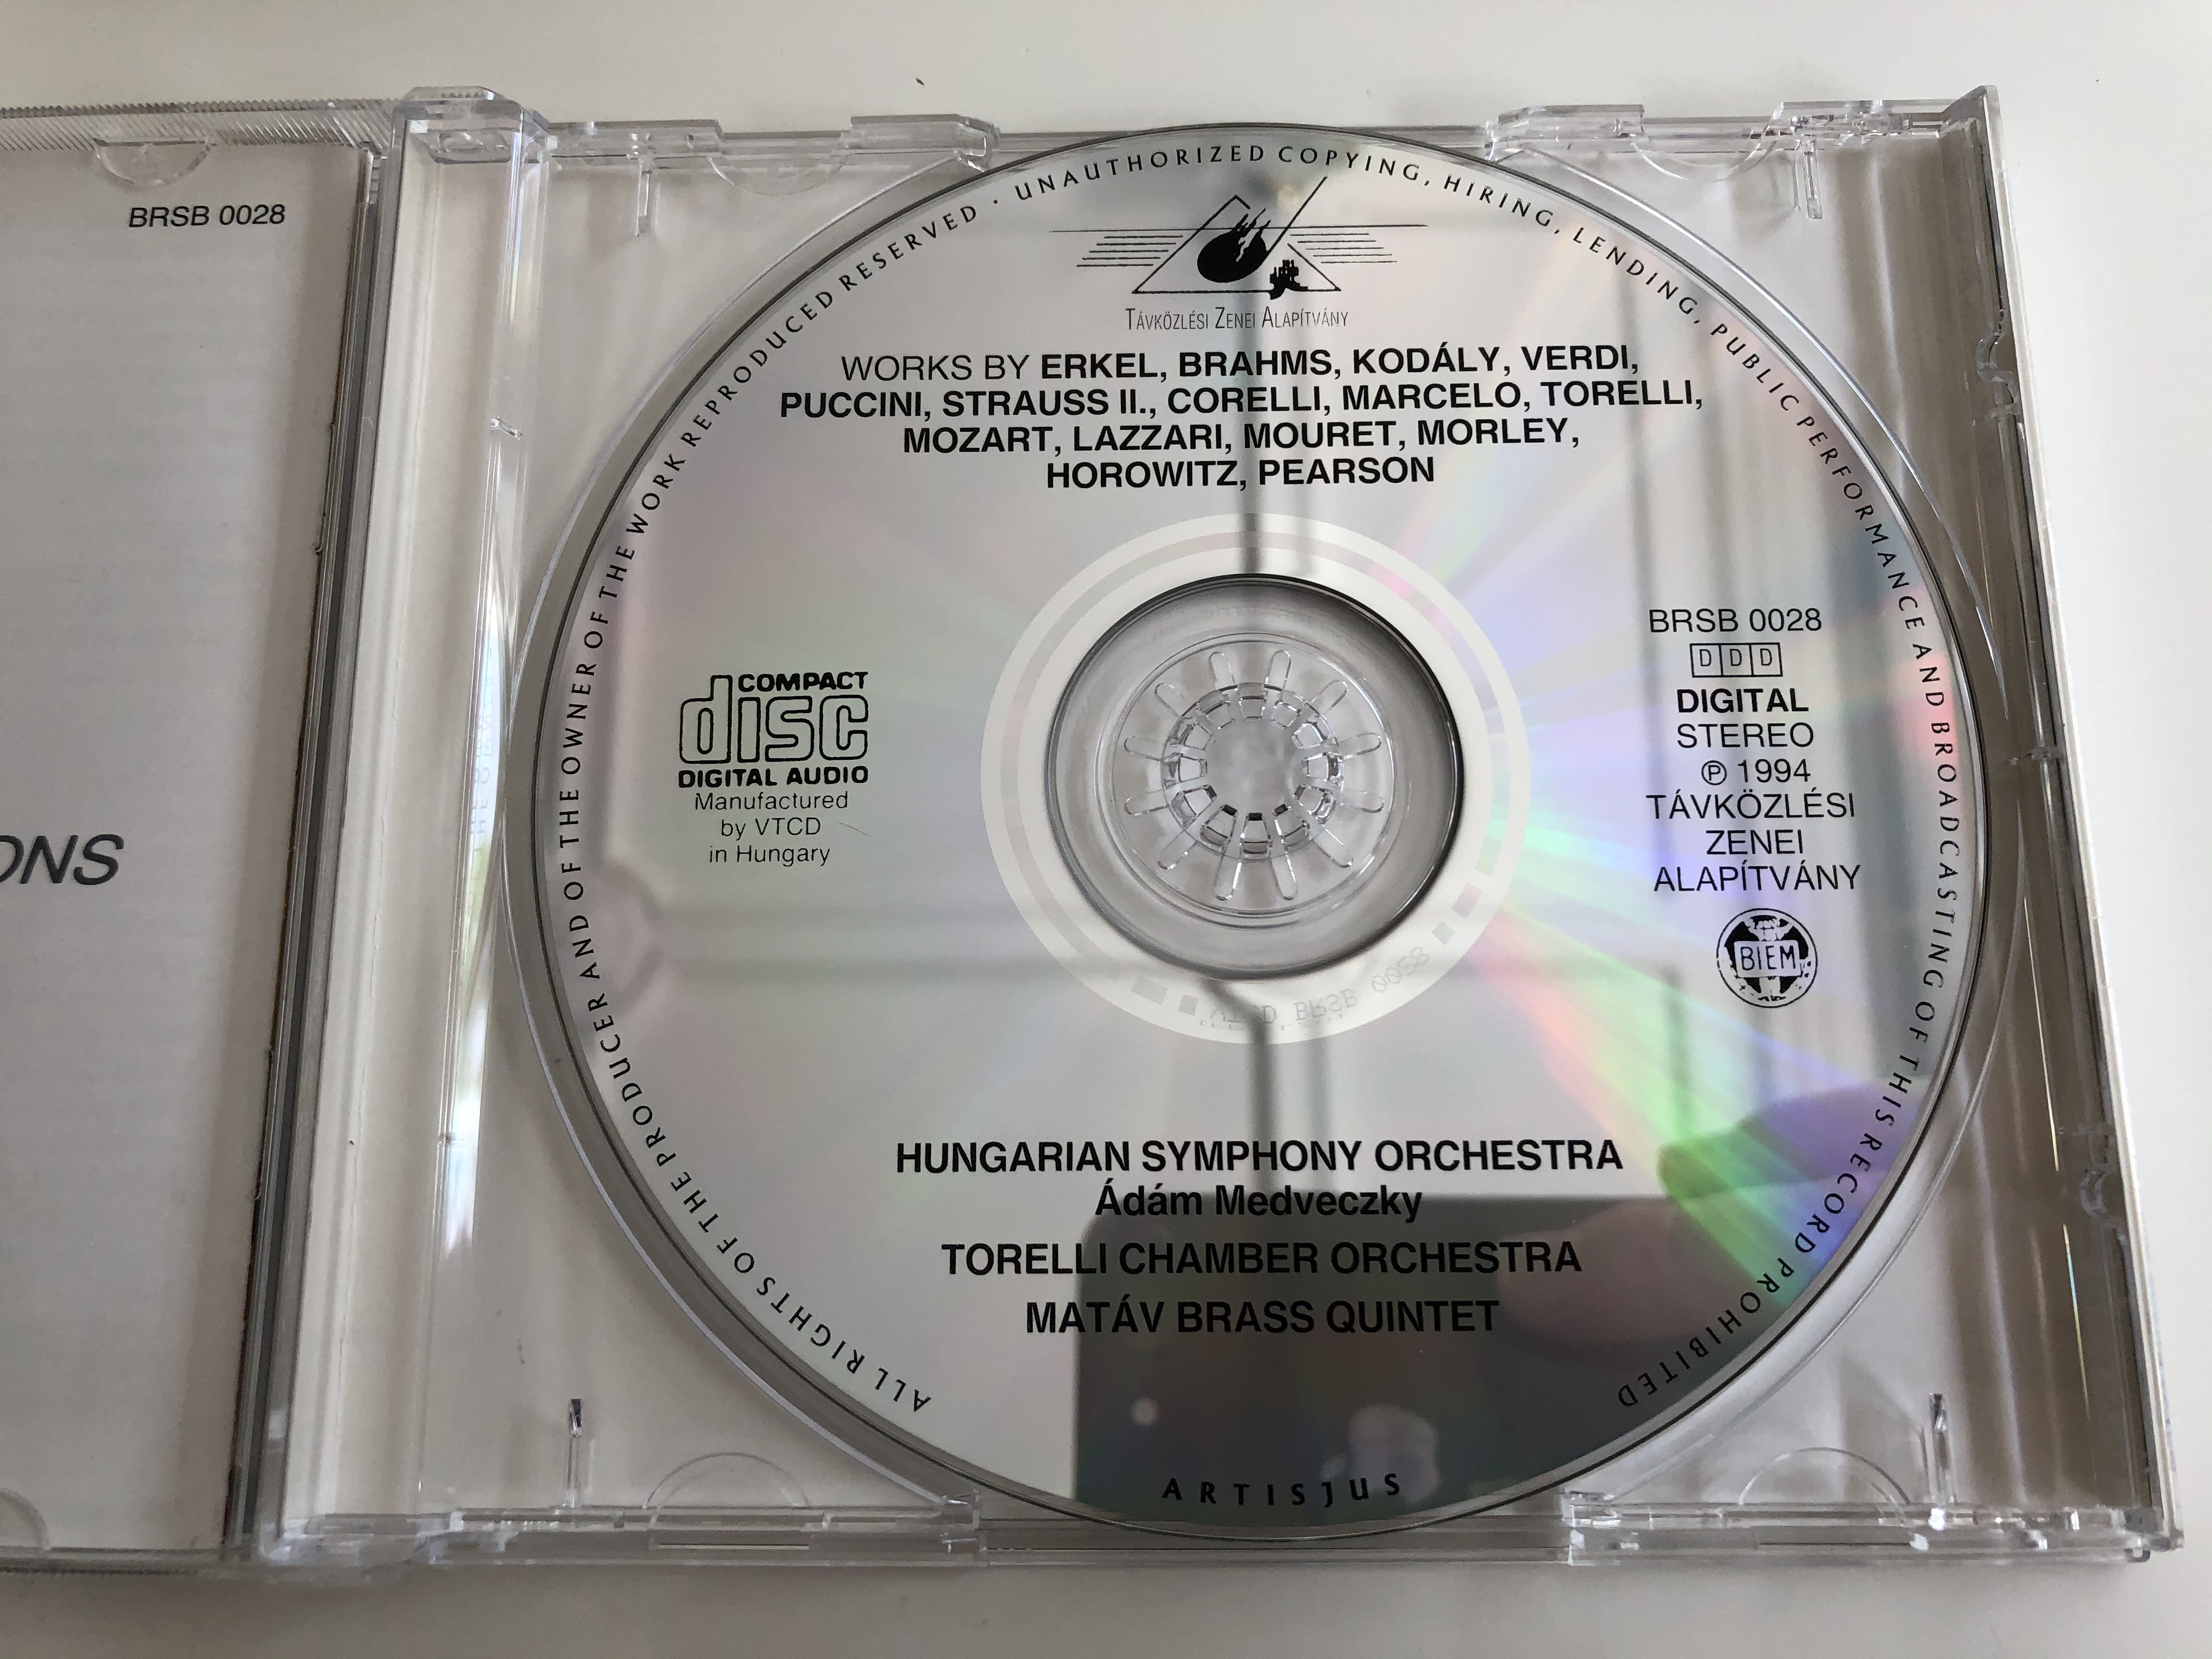 magyar-szimfonikus-zenekar-hungarian-symphony-orchestra-ungarisches-symphonieorchester-tavkozlesi-zenei-alapitvany-audio-cd-1994-stereo-brsb-0028-7-.jpg